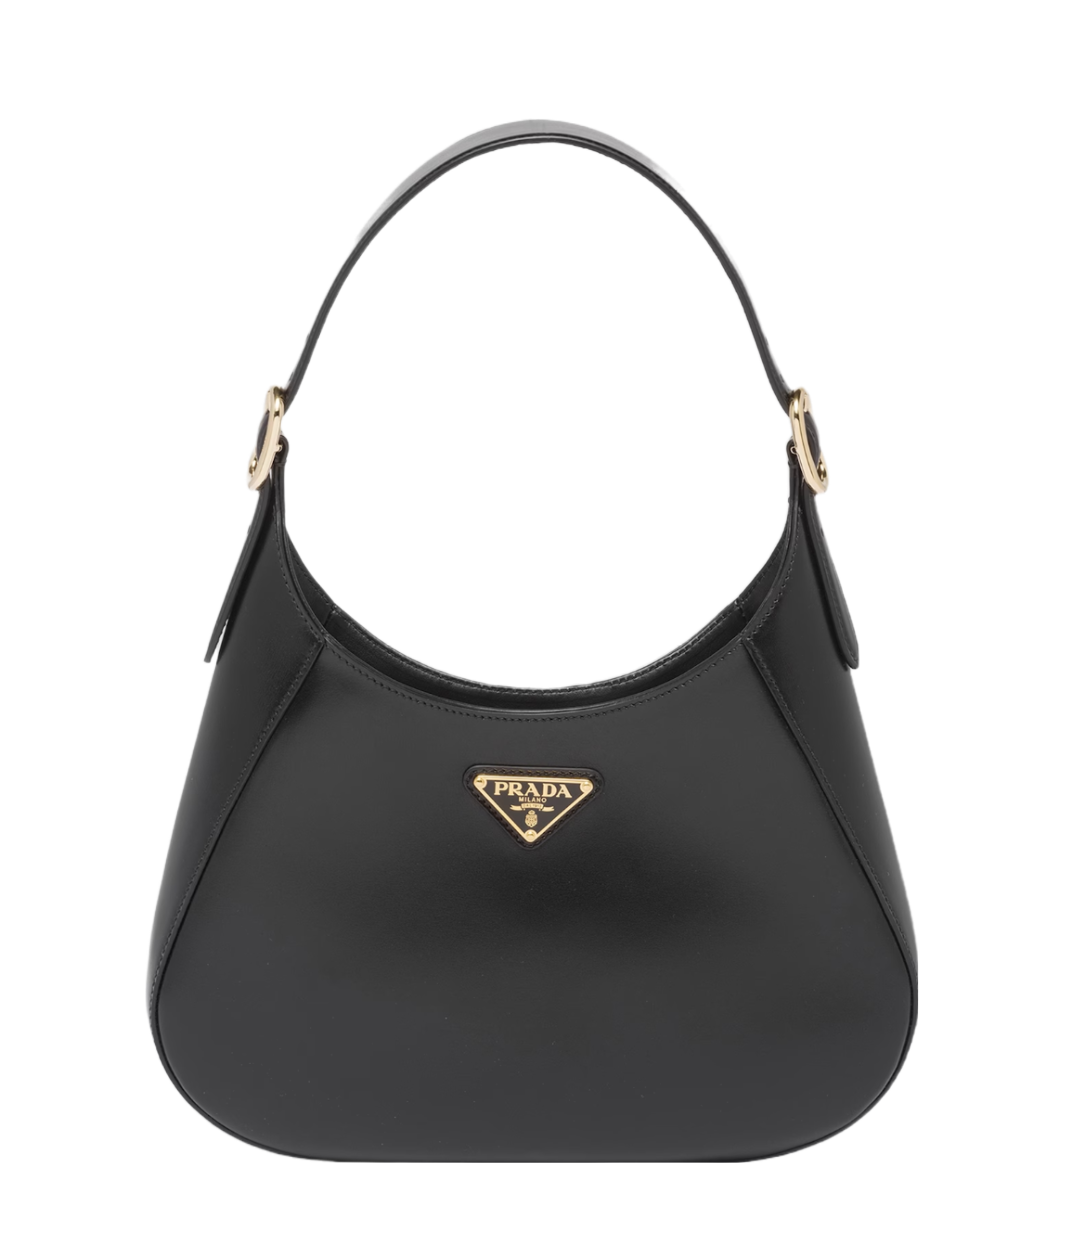 Prada's Arqué Leather Shoulder Bag Is Reaching Cult Status